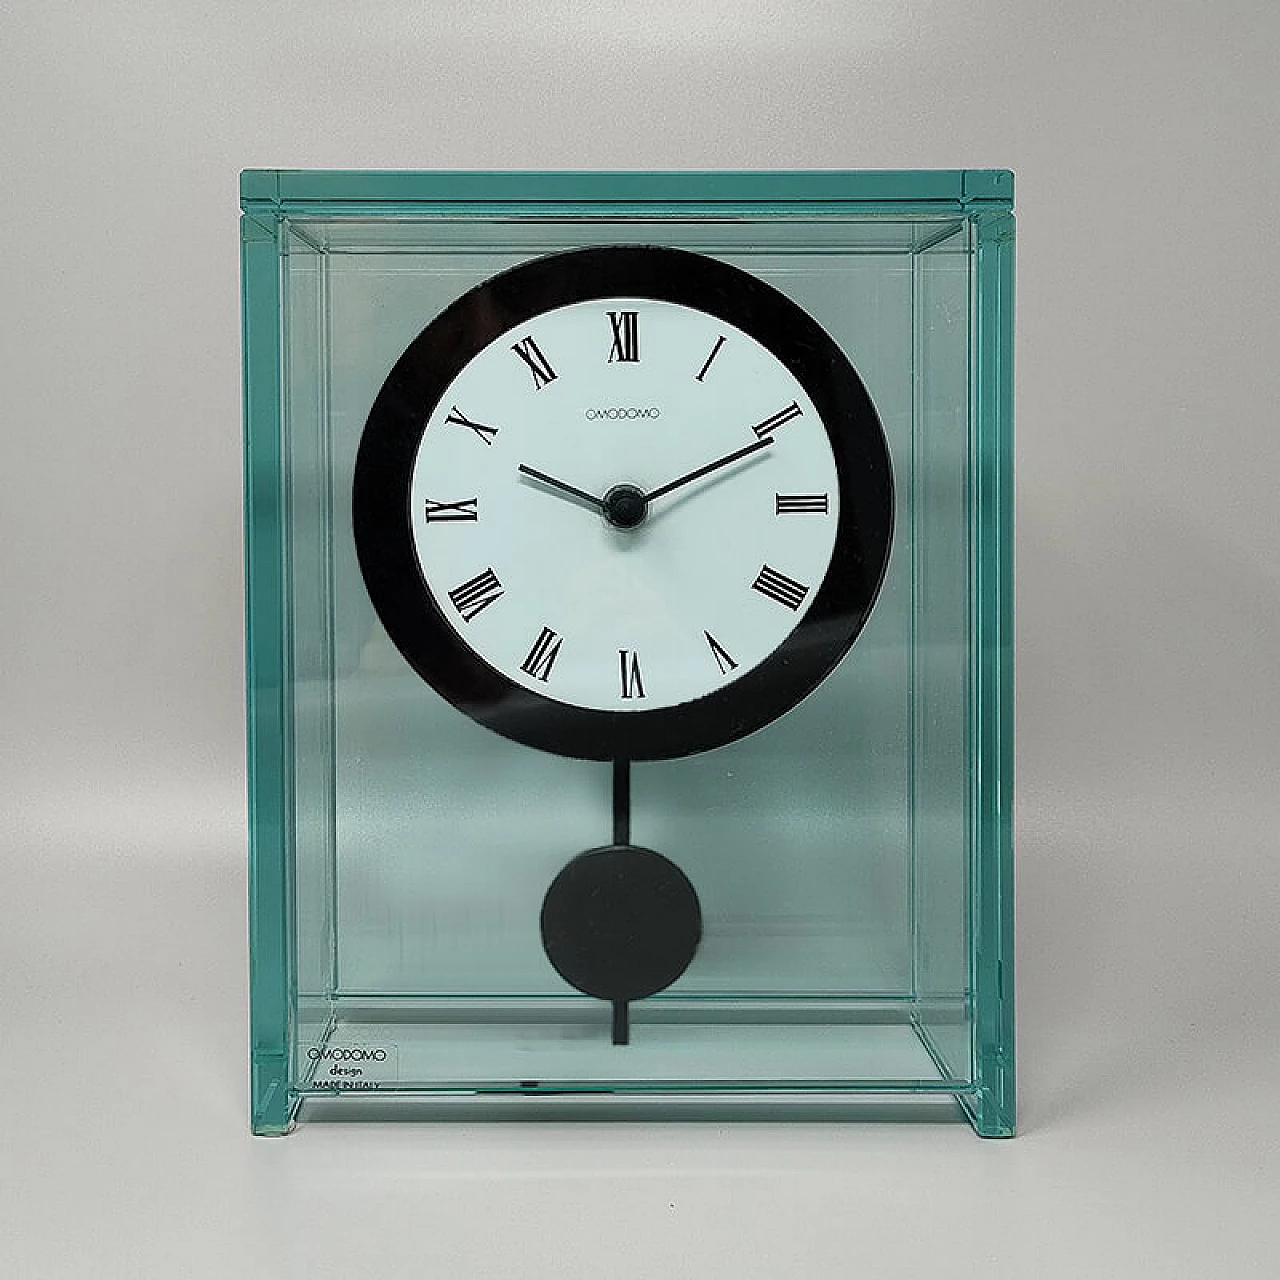 Omodomo crystal pendulum clock, 1970s 2